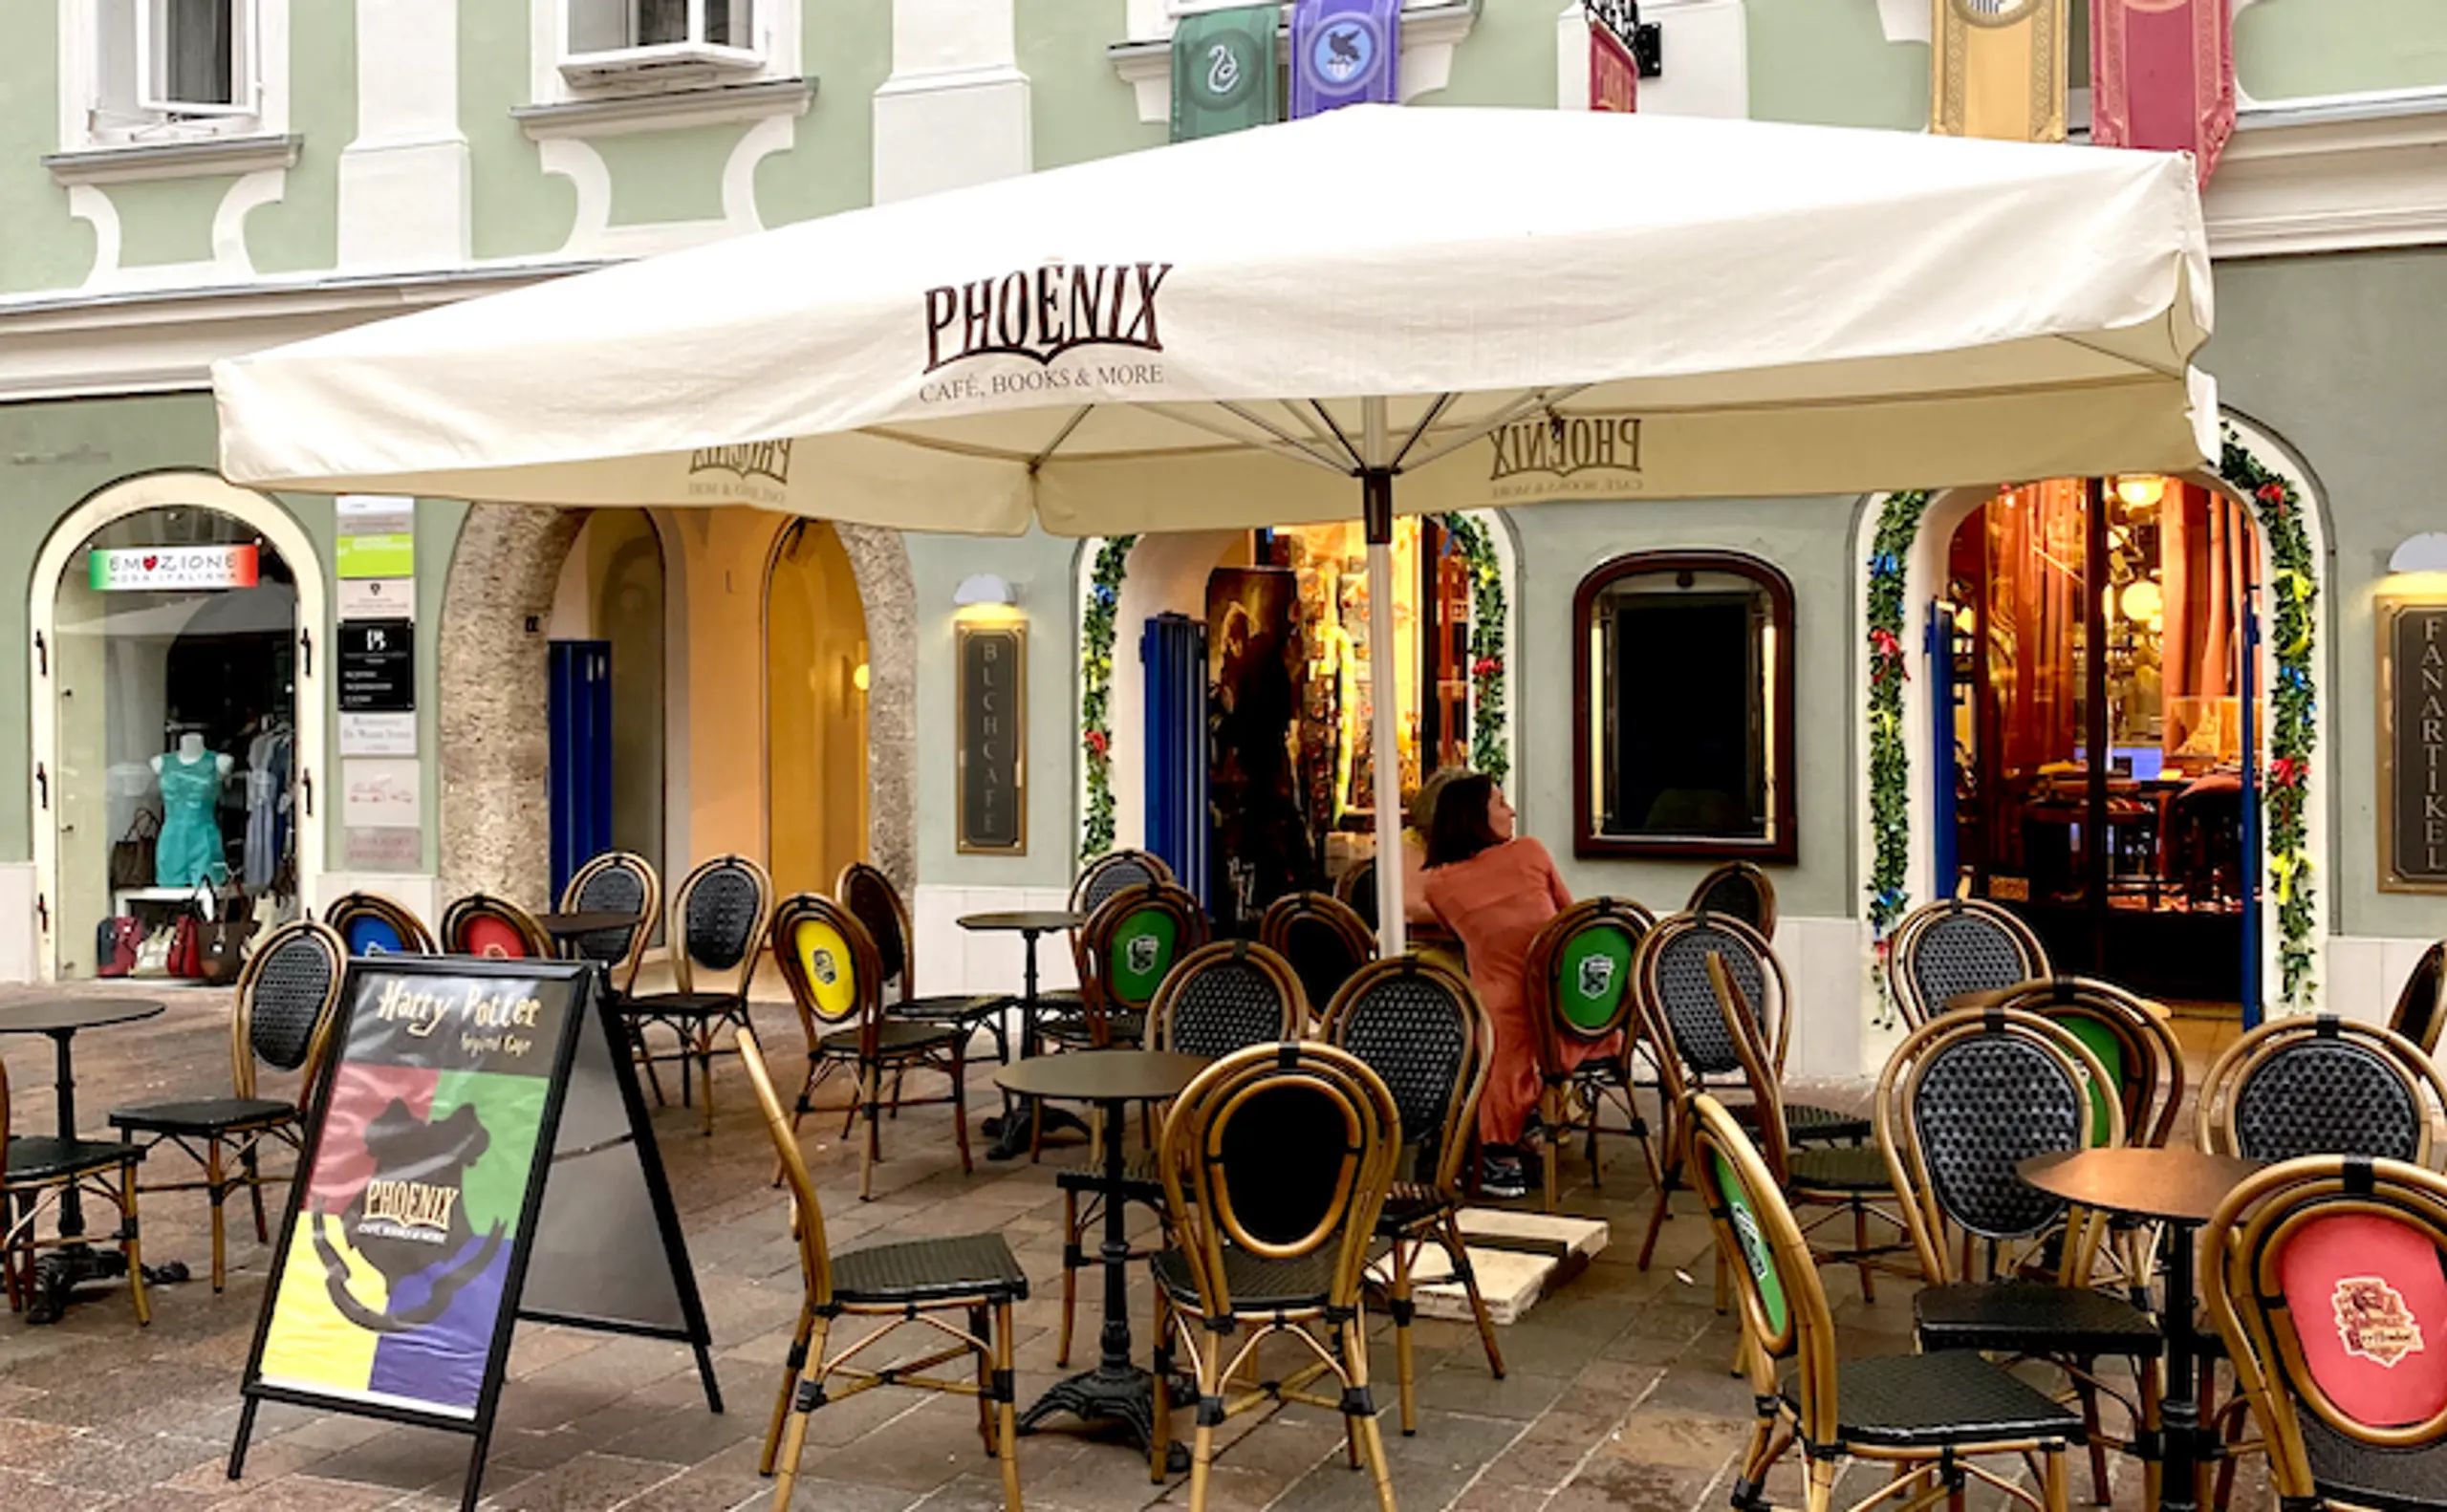 Harry Potter Café "Buchcafé Phoenix" in Klagenfurt